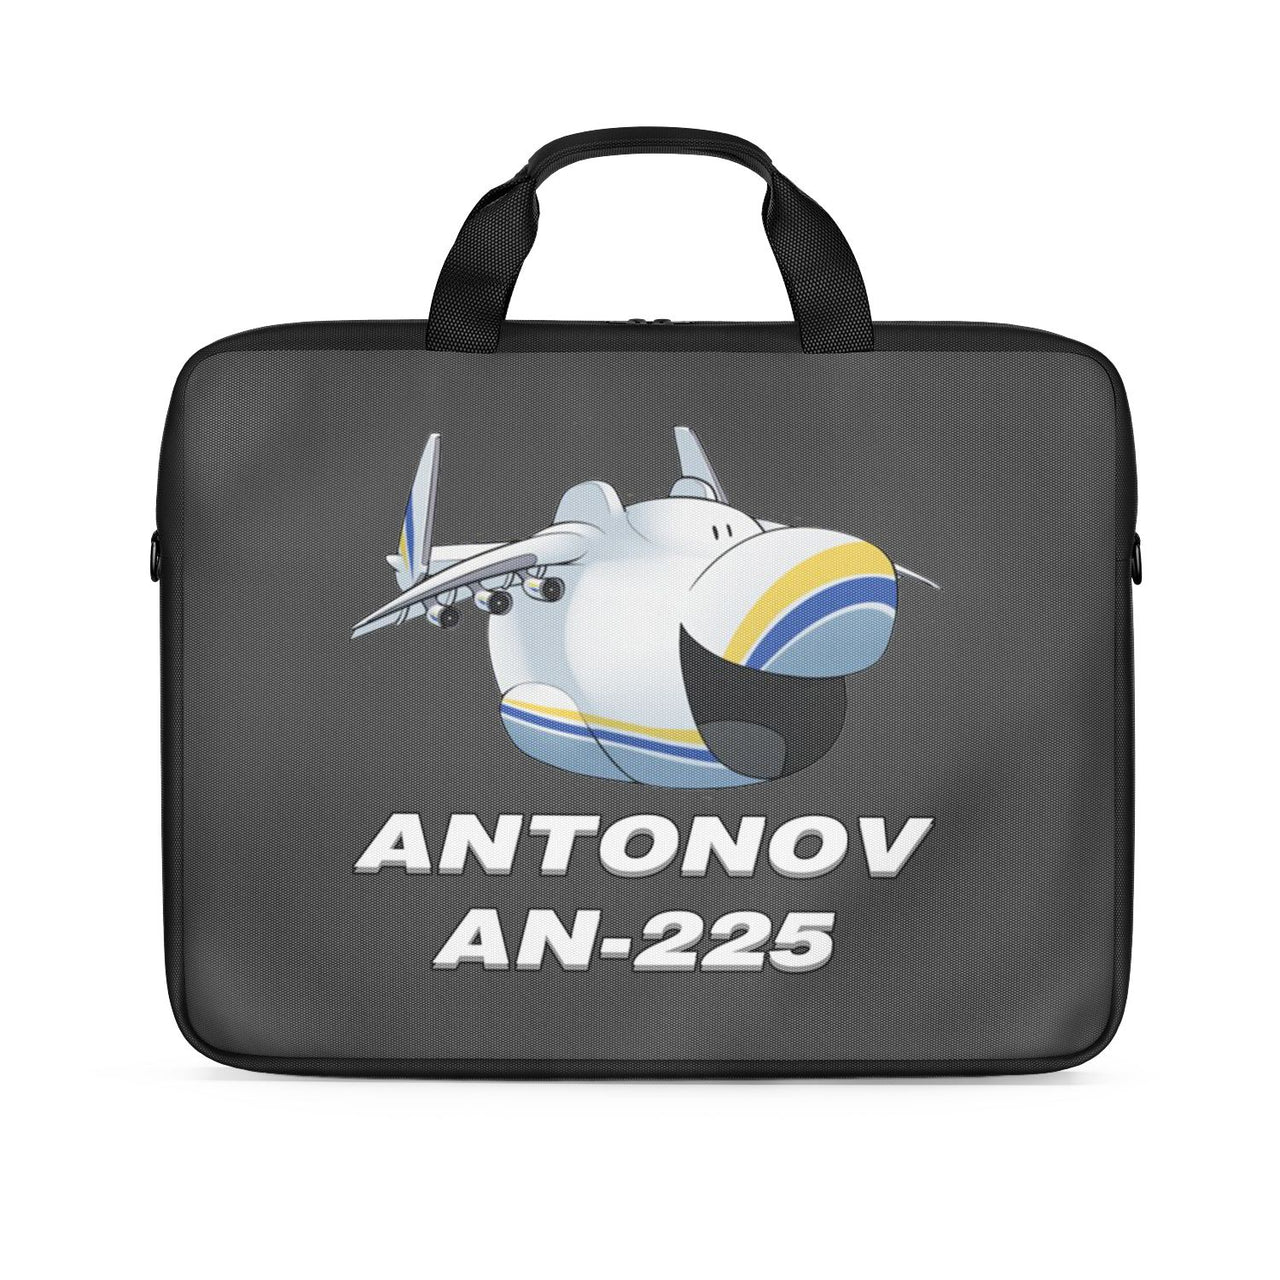 Antonov AN-225 (23) Designed Laptop & Tablet Bags